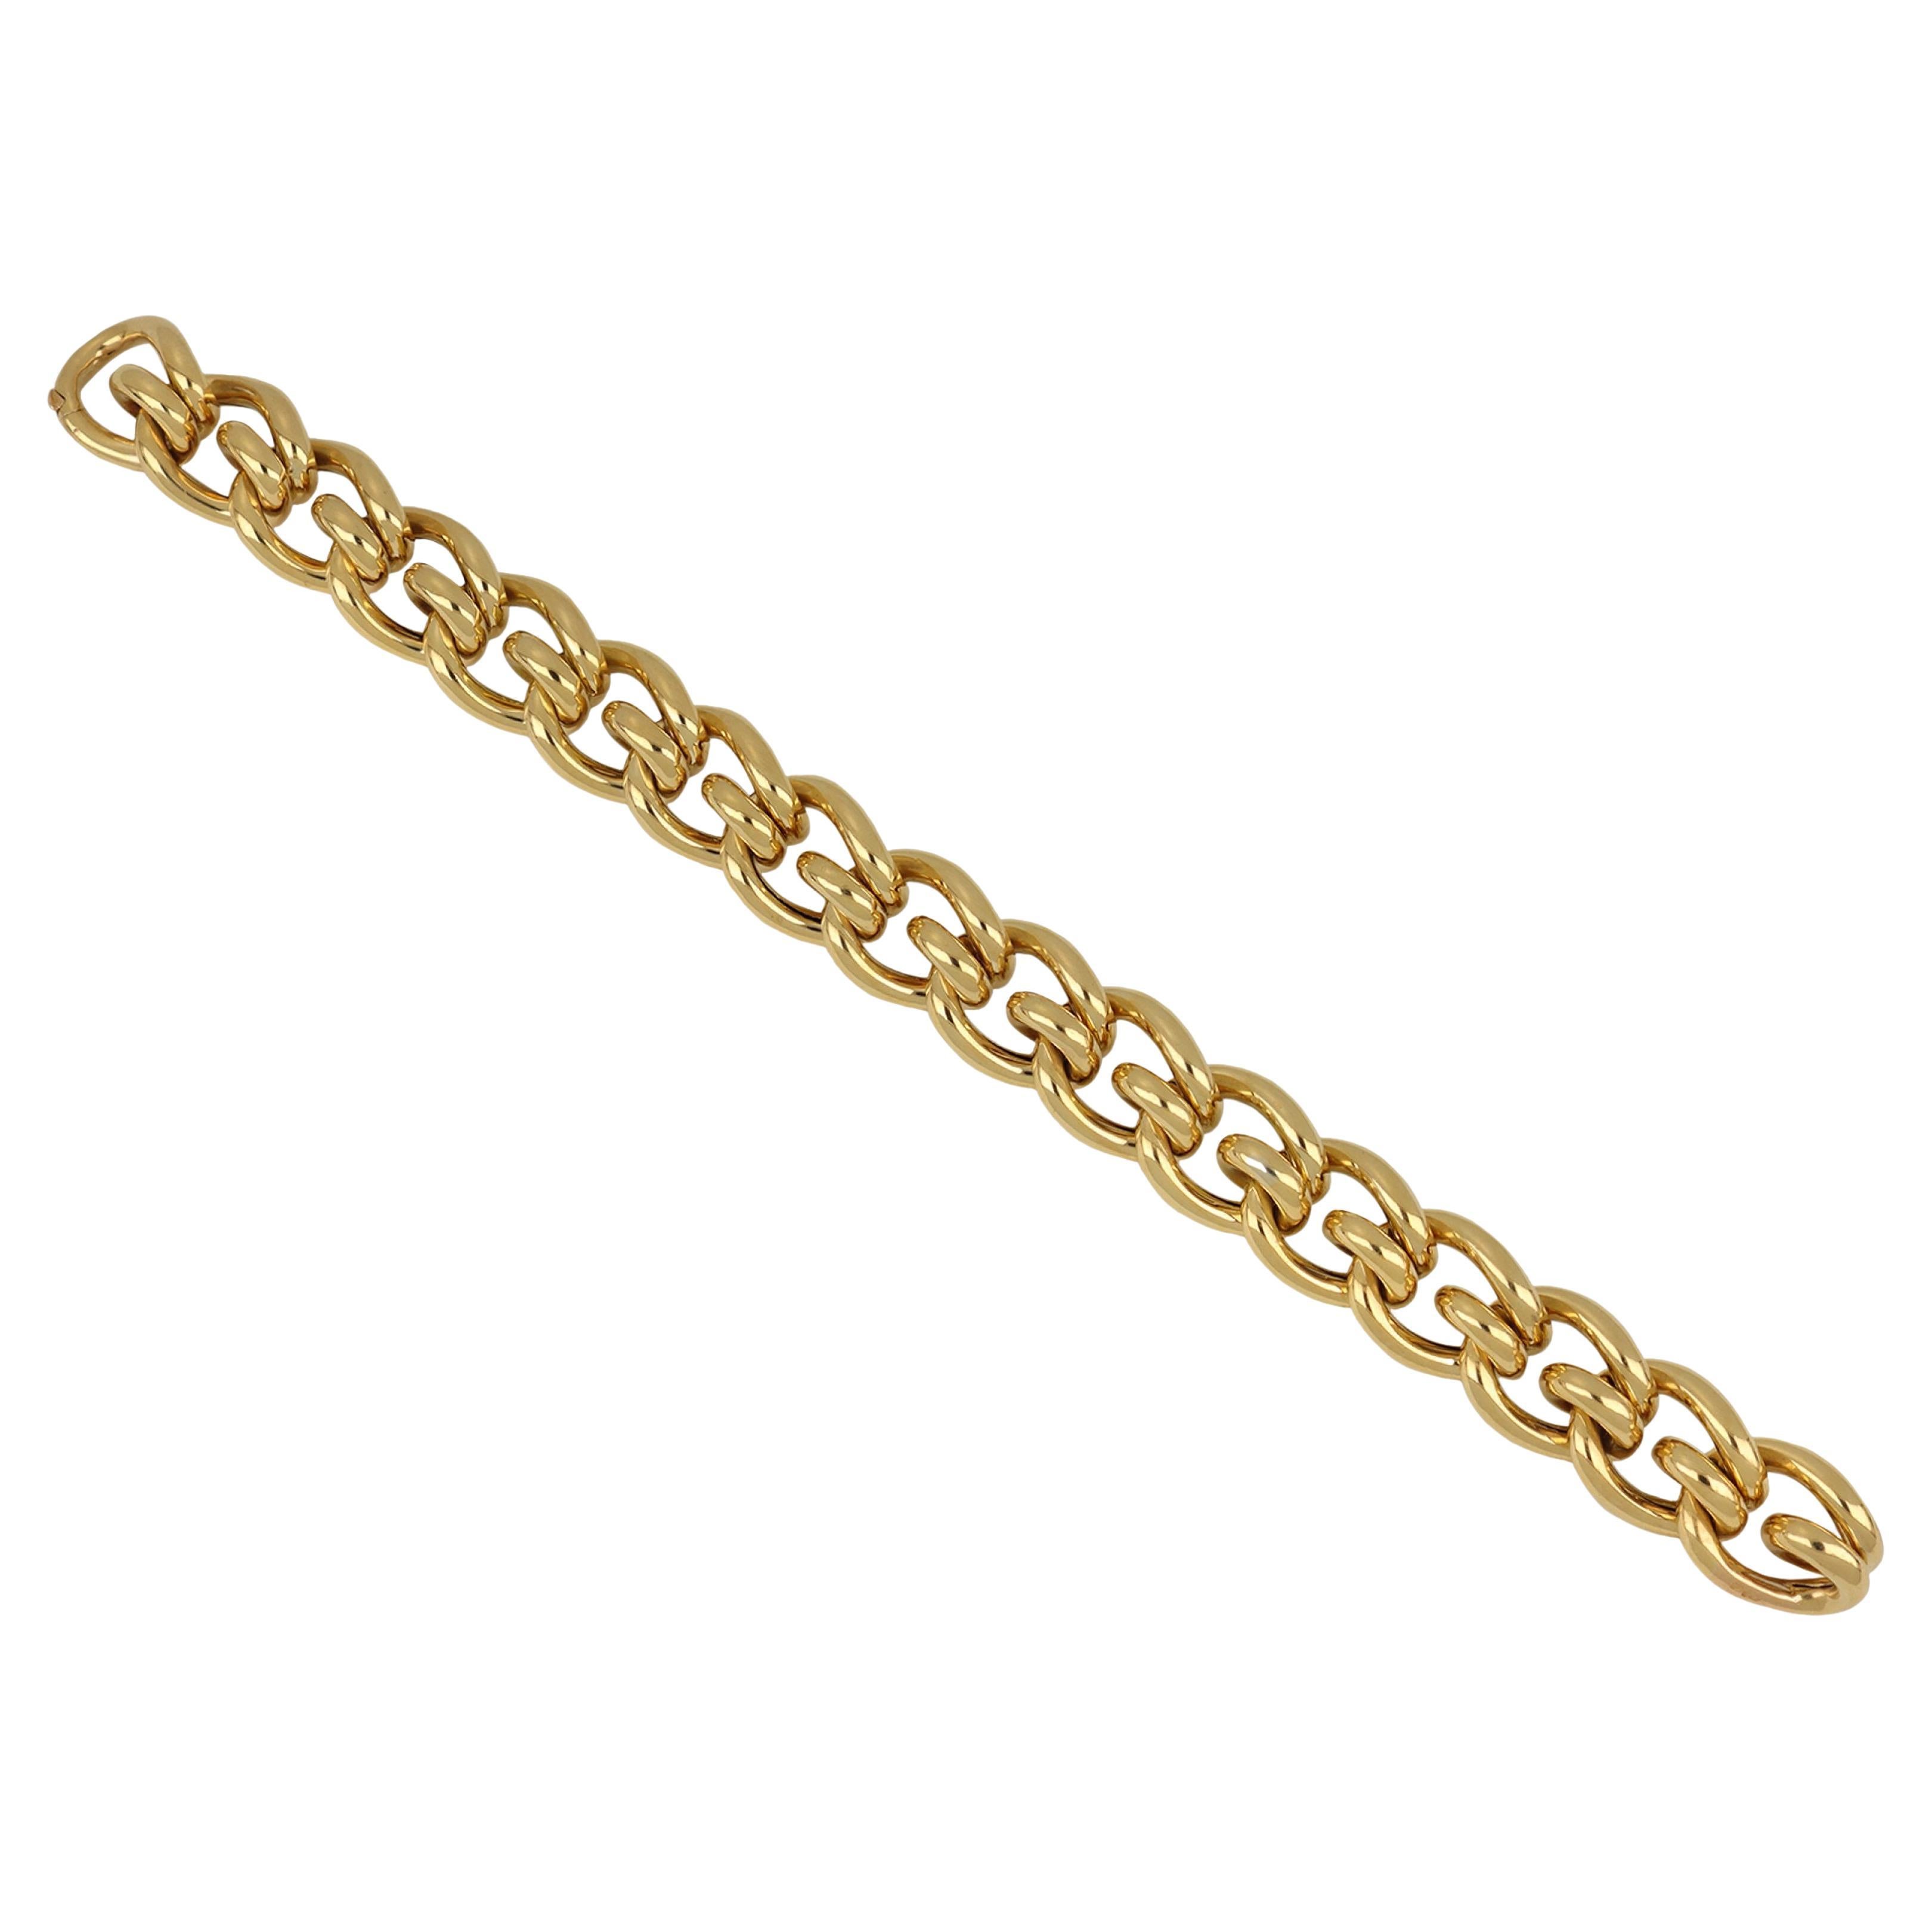 Cartier gold mousetrap link bracelet, French, circa 1940.